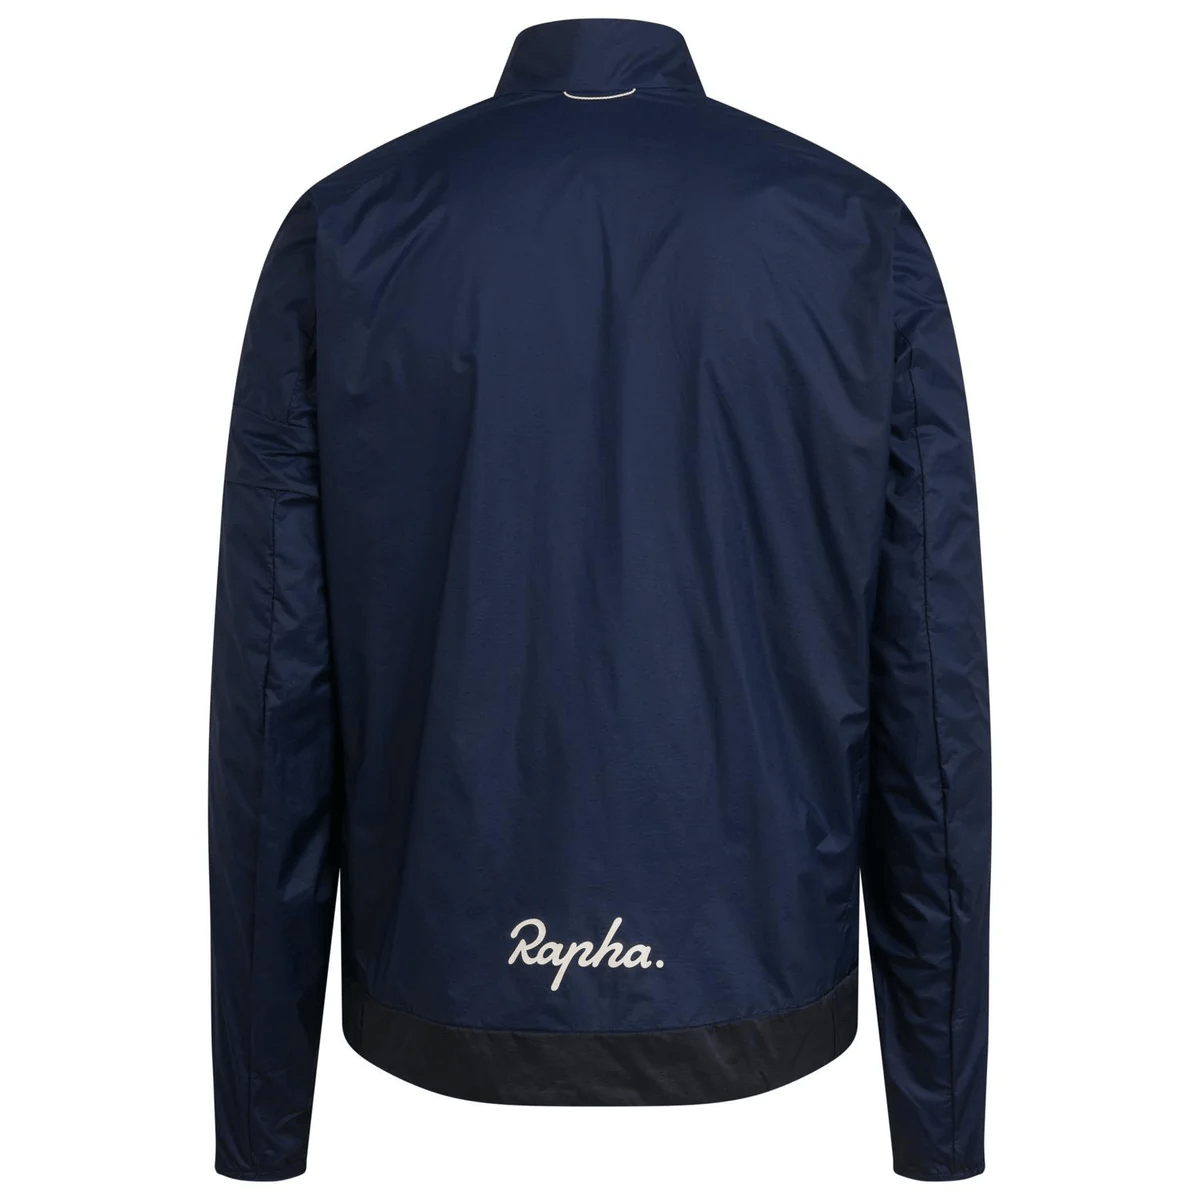 Rapha Men's Explore Lightweight Jacket Navy XS Apparel - Clothing - Men's Jackets - Mountain